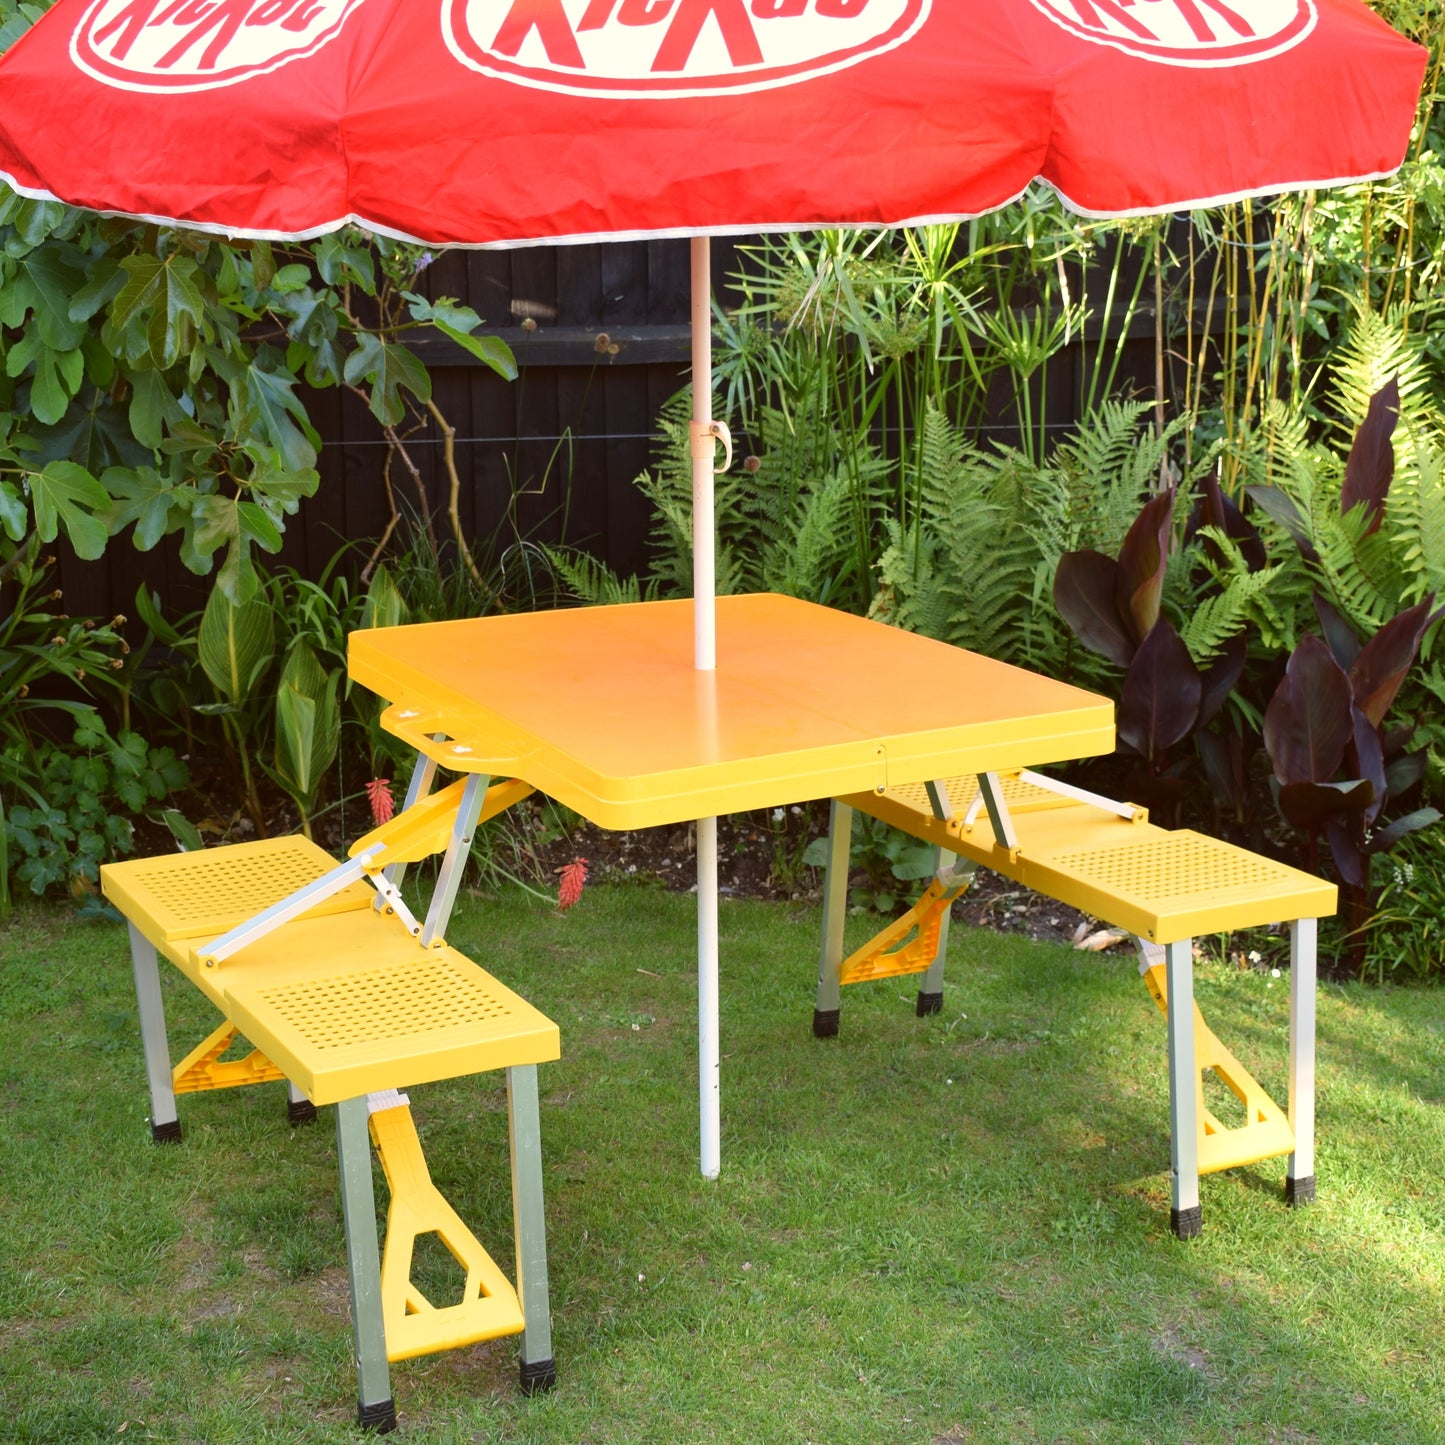 Vintage 1990s Folding Picnic Table Set - Yellow